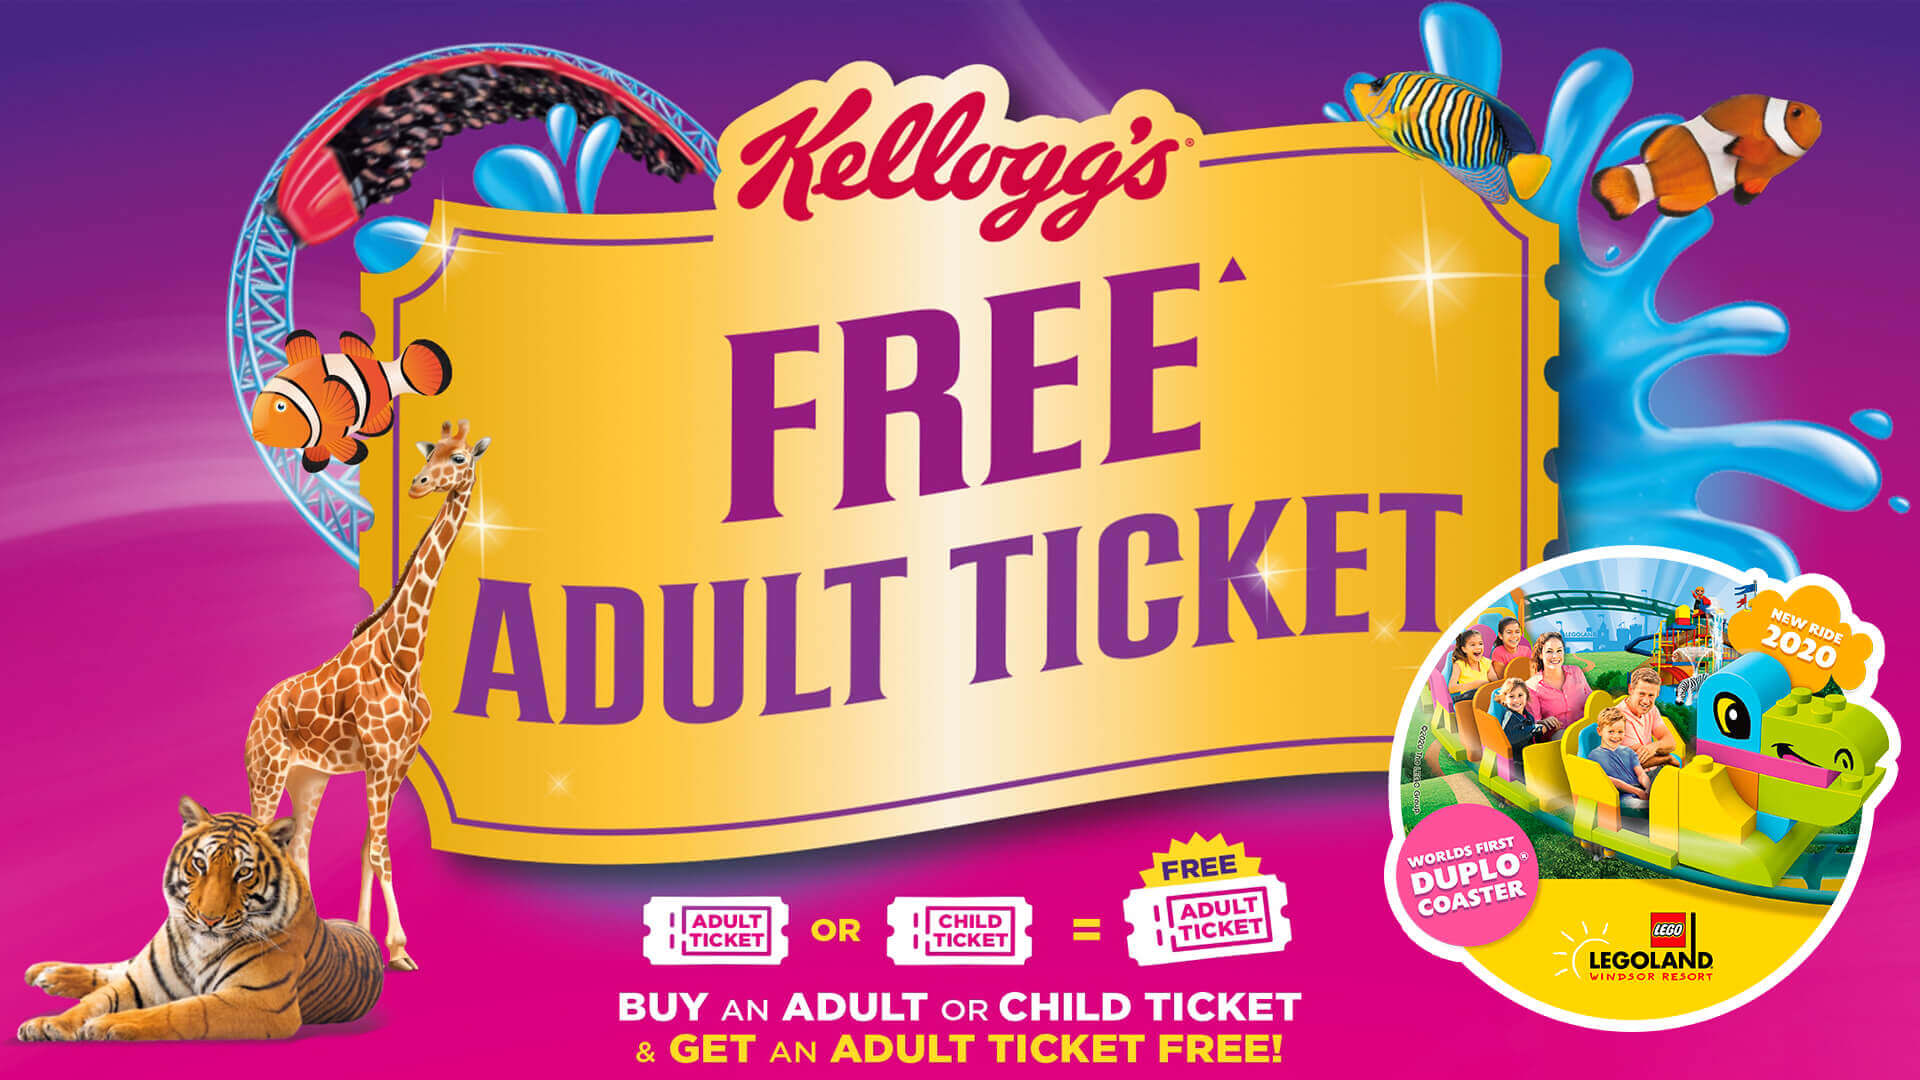 Kellogg's Free Adult Ticket